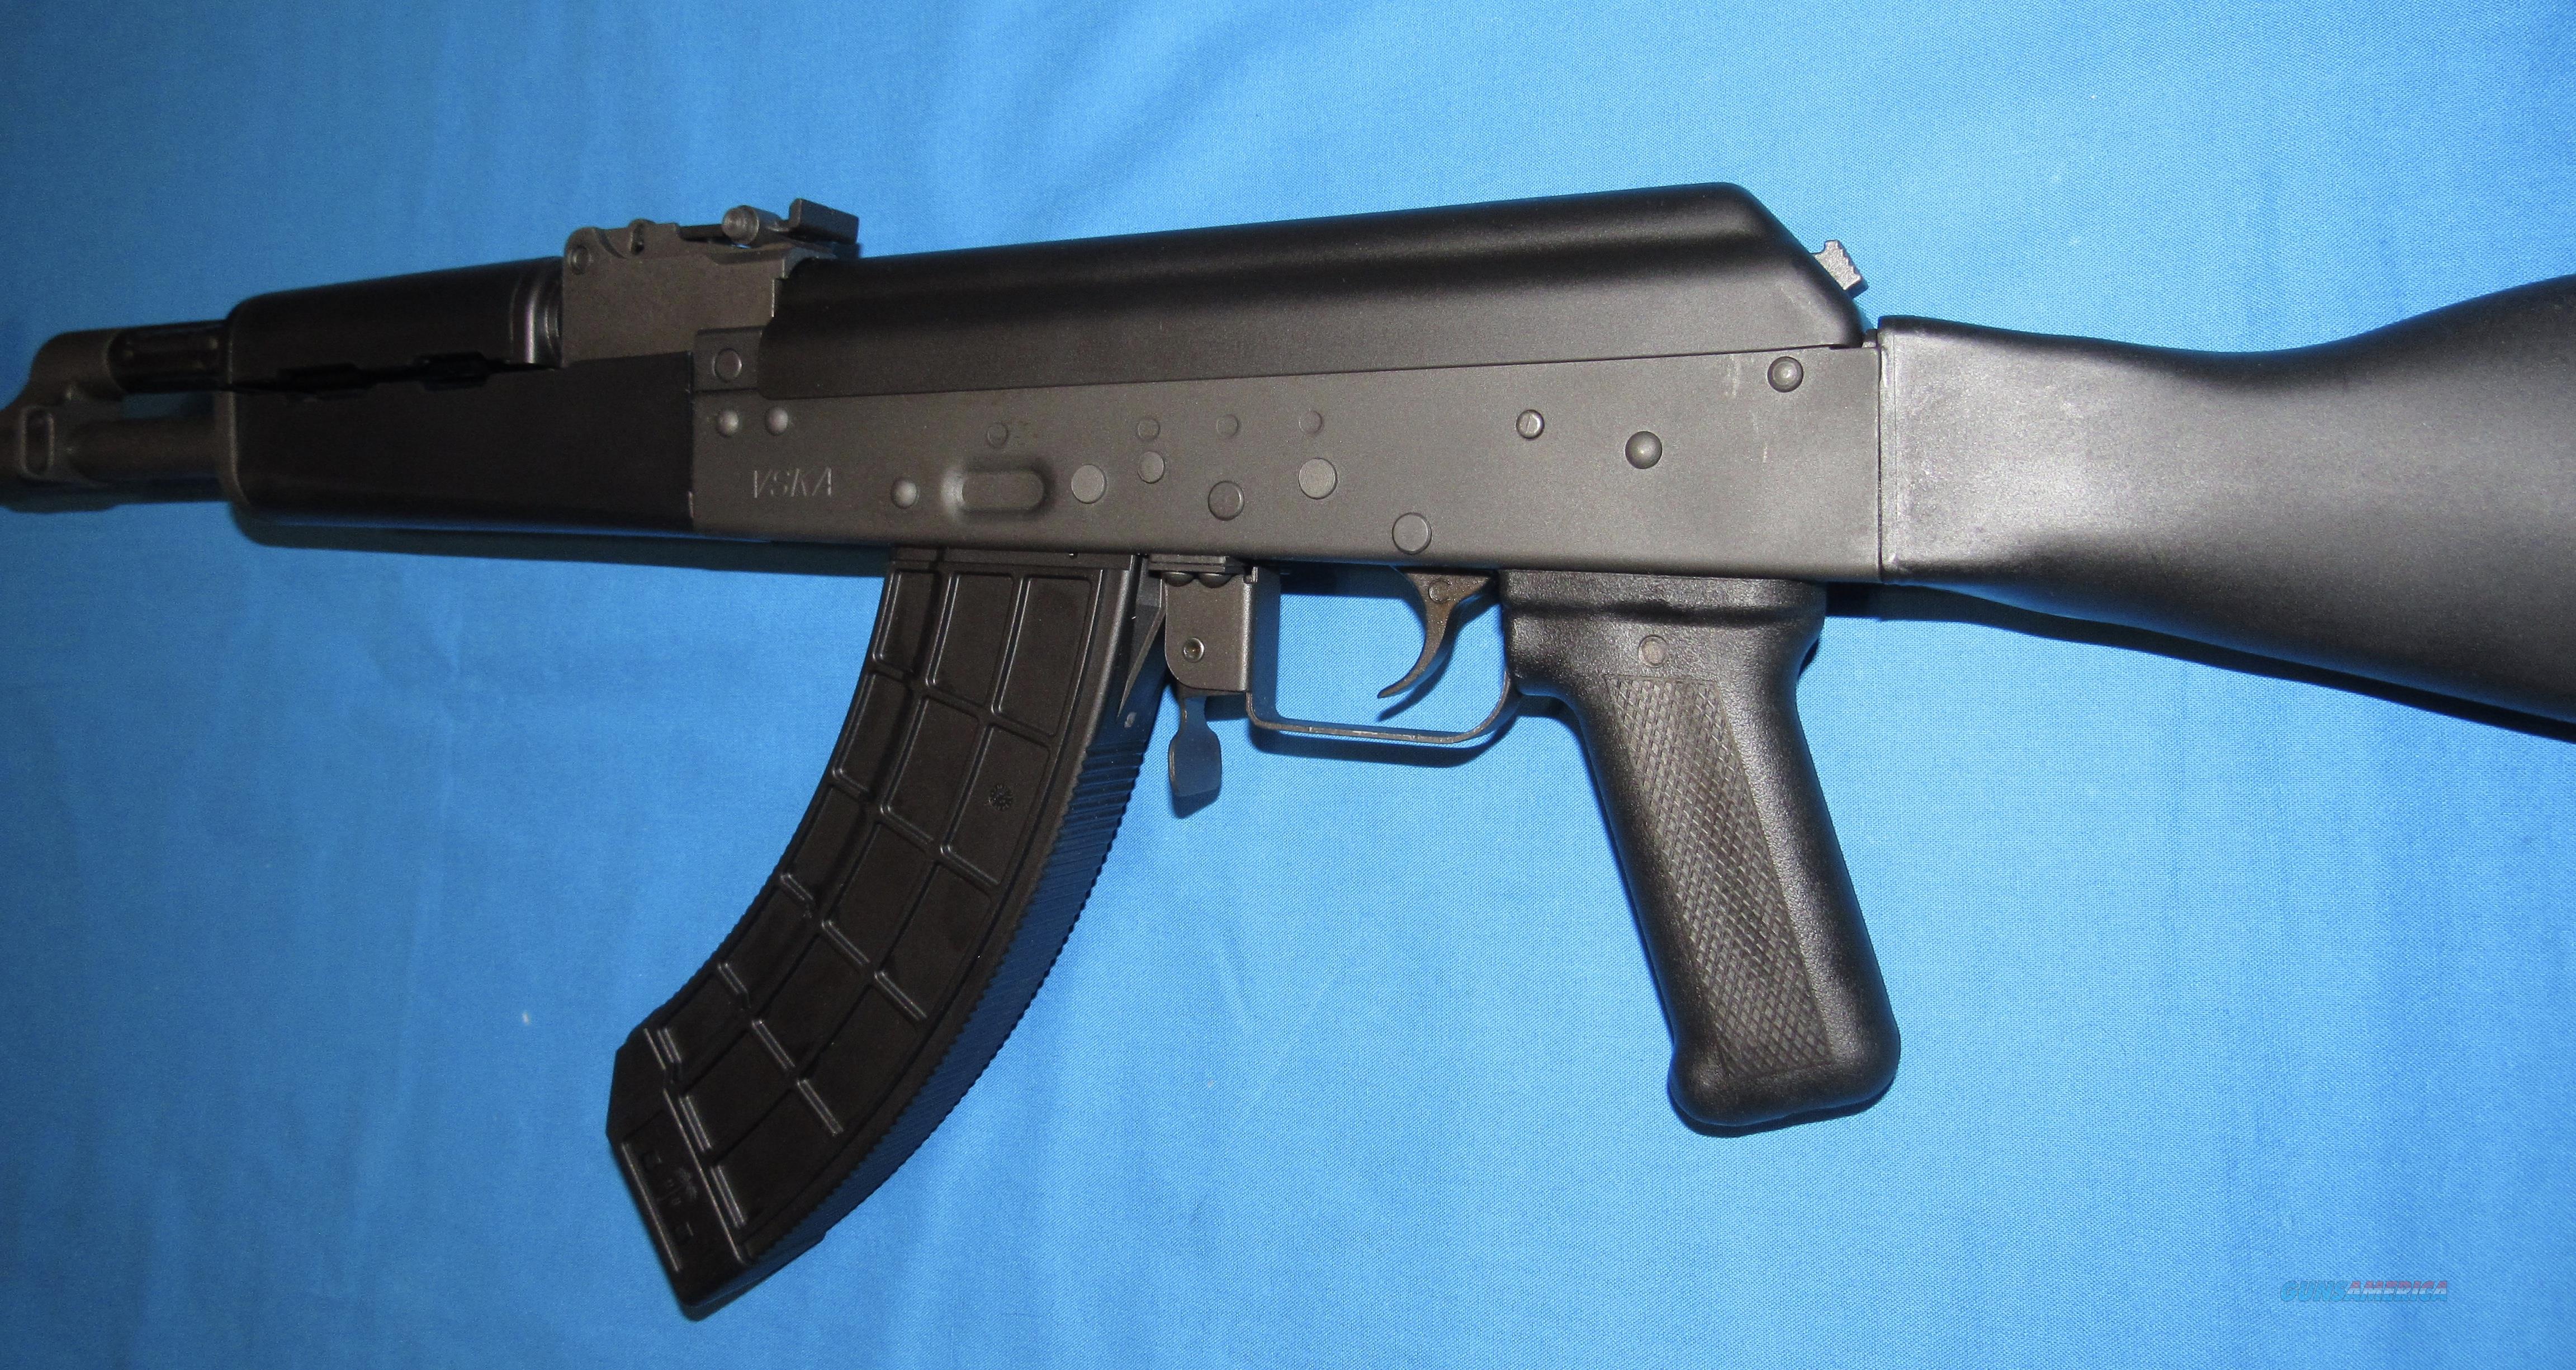 CENTURY ARMS VSKA SYNTHETIC 7.62X39... for sale at Gunsamerica.com ...